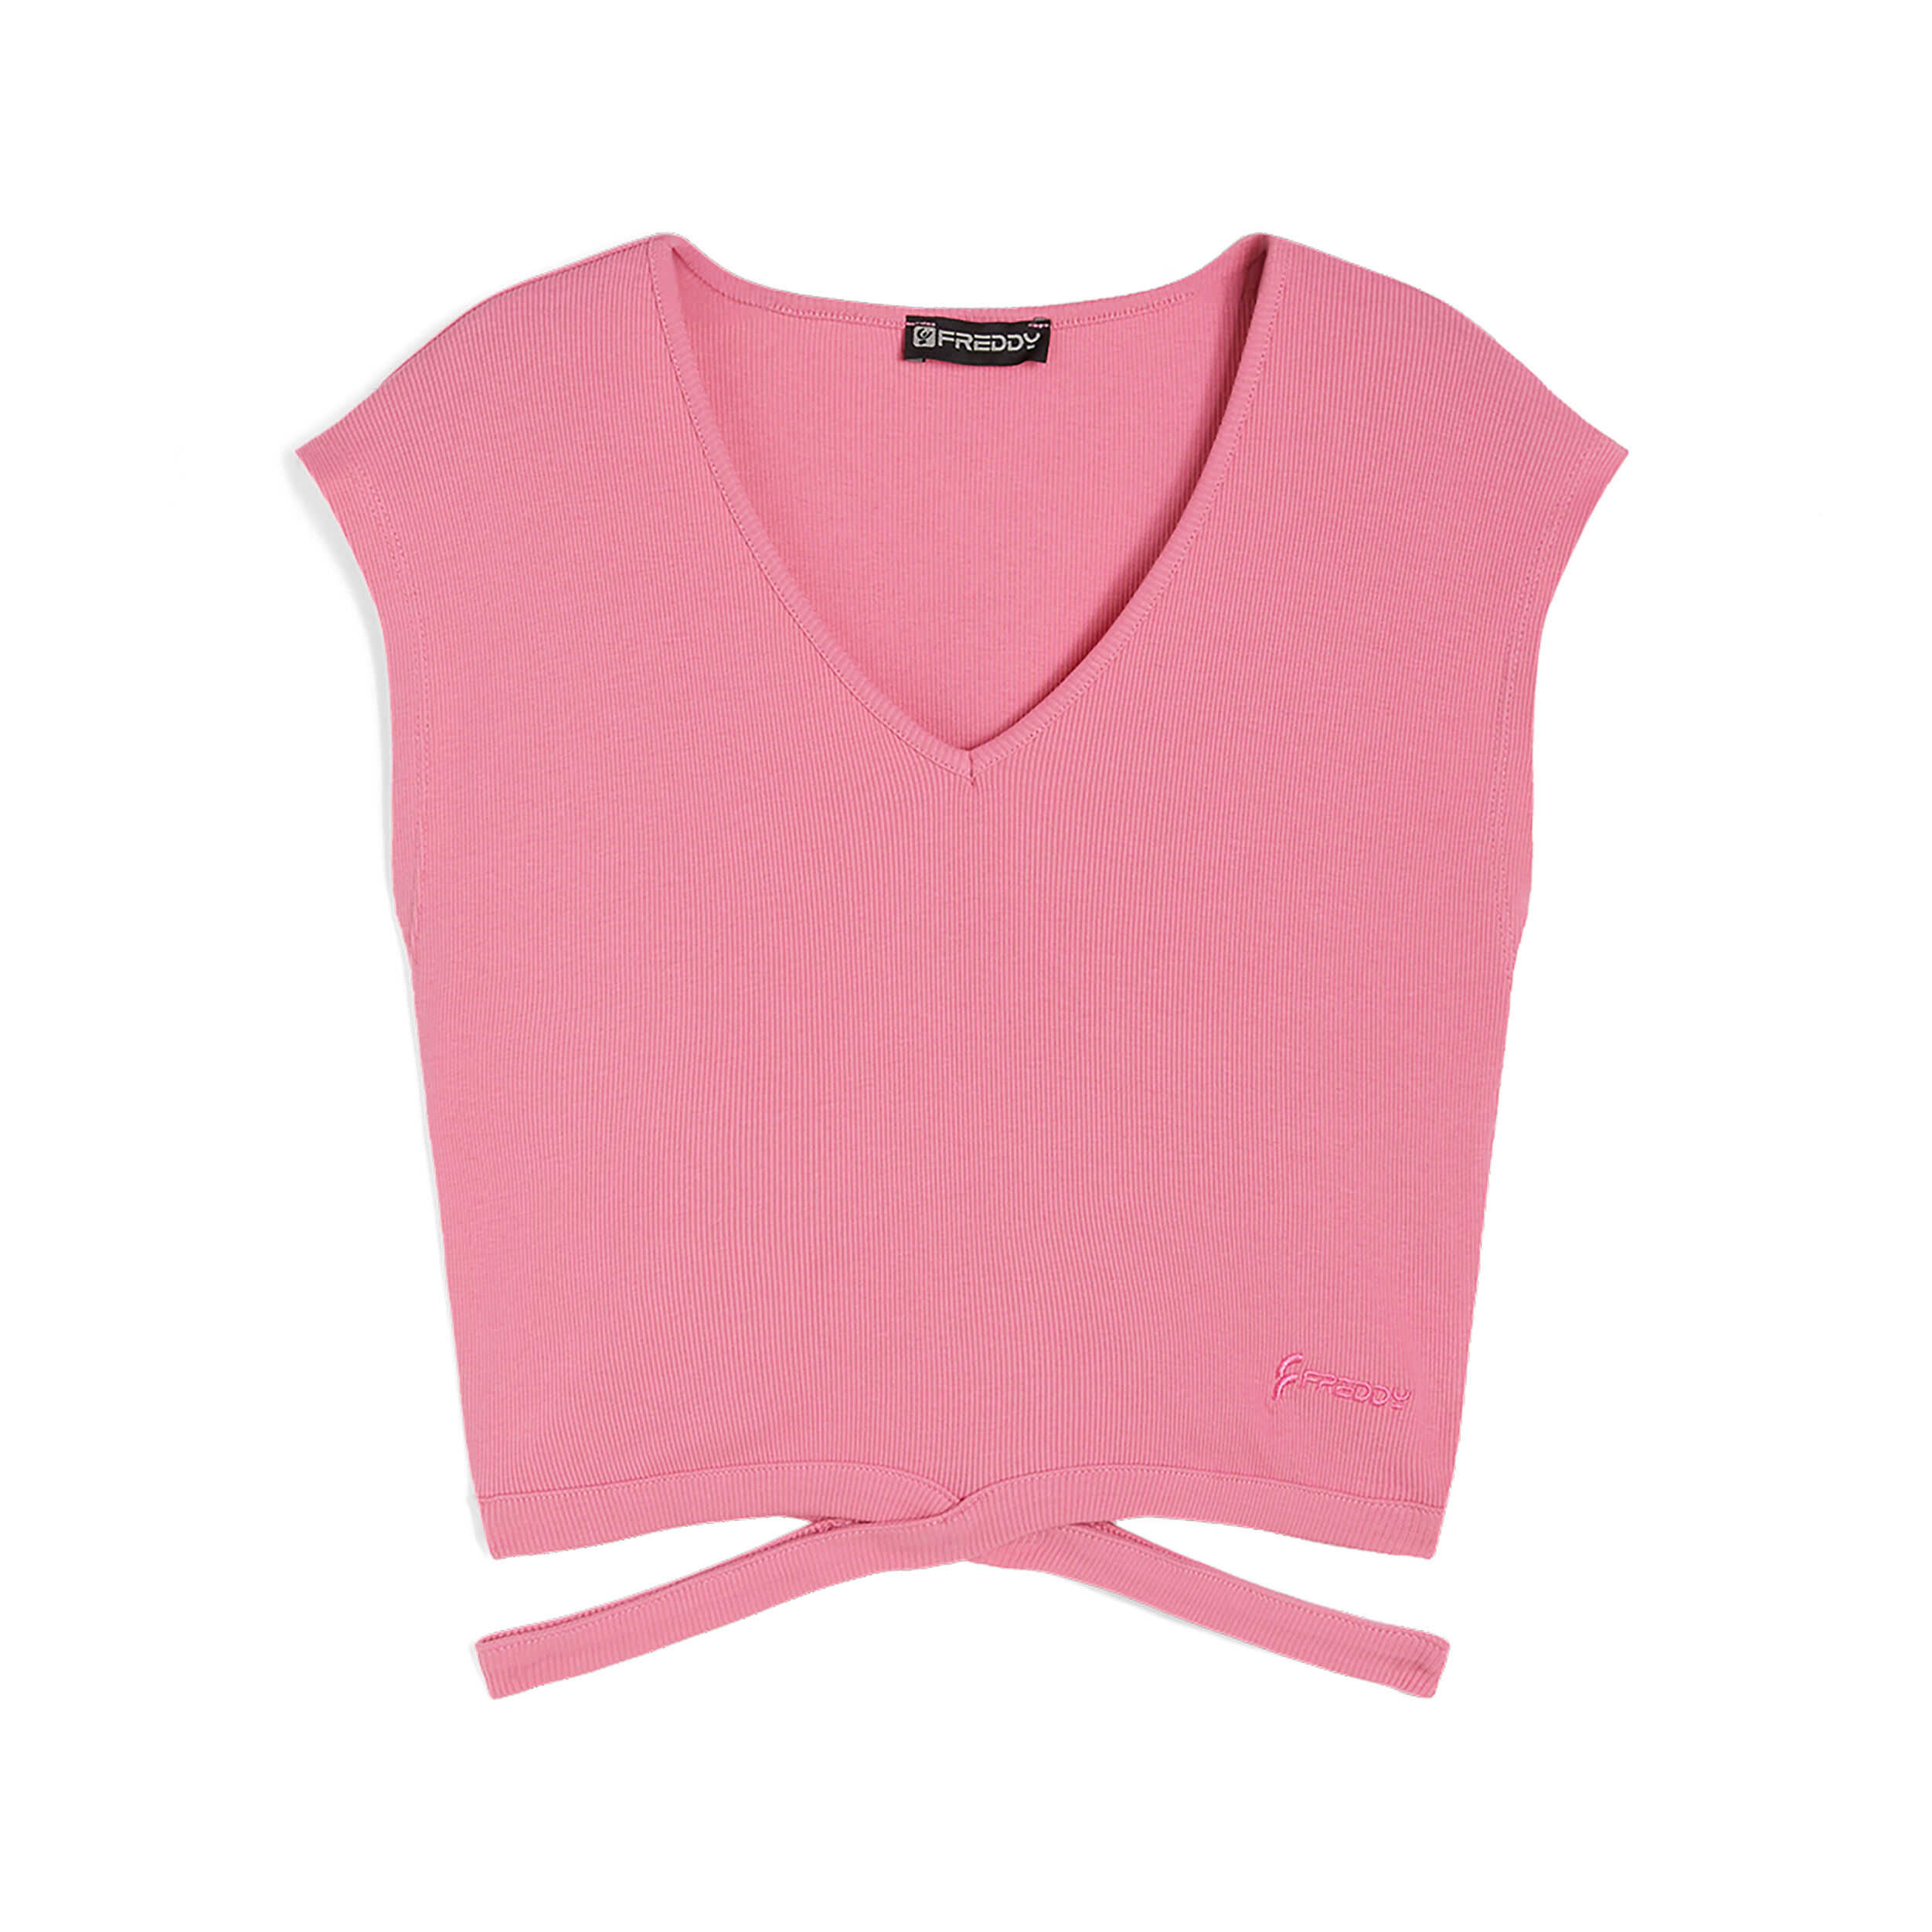 Freddy T-shirt slim fit in costina con gioco di incroci sul fondo Pink Carnation Donna Large